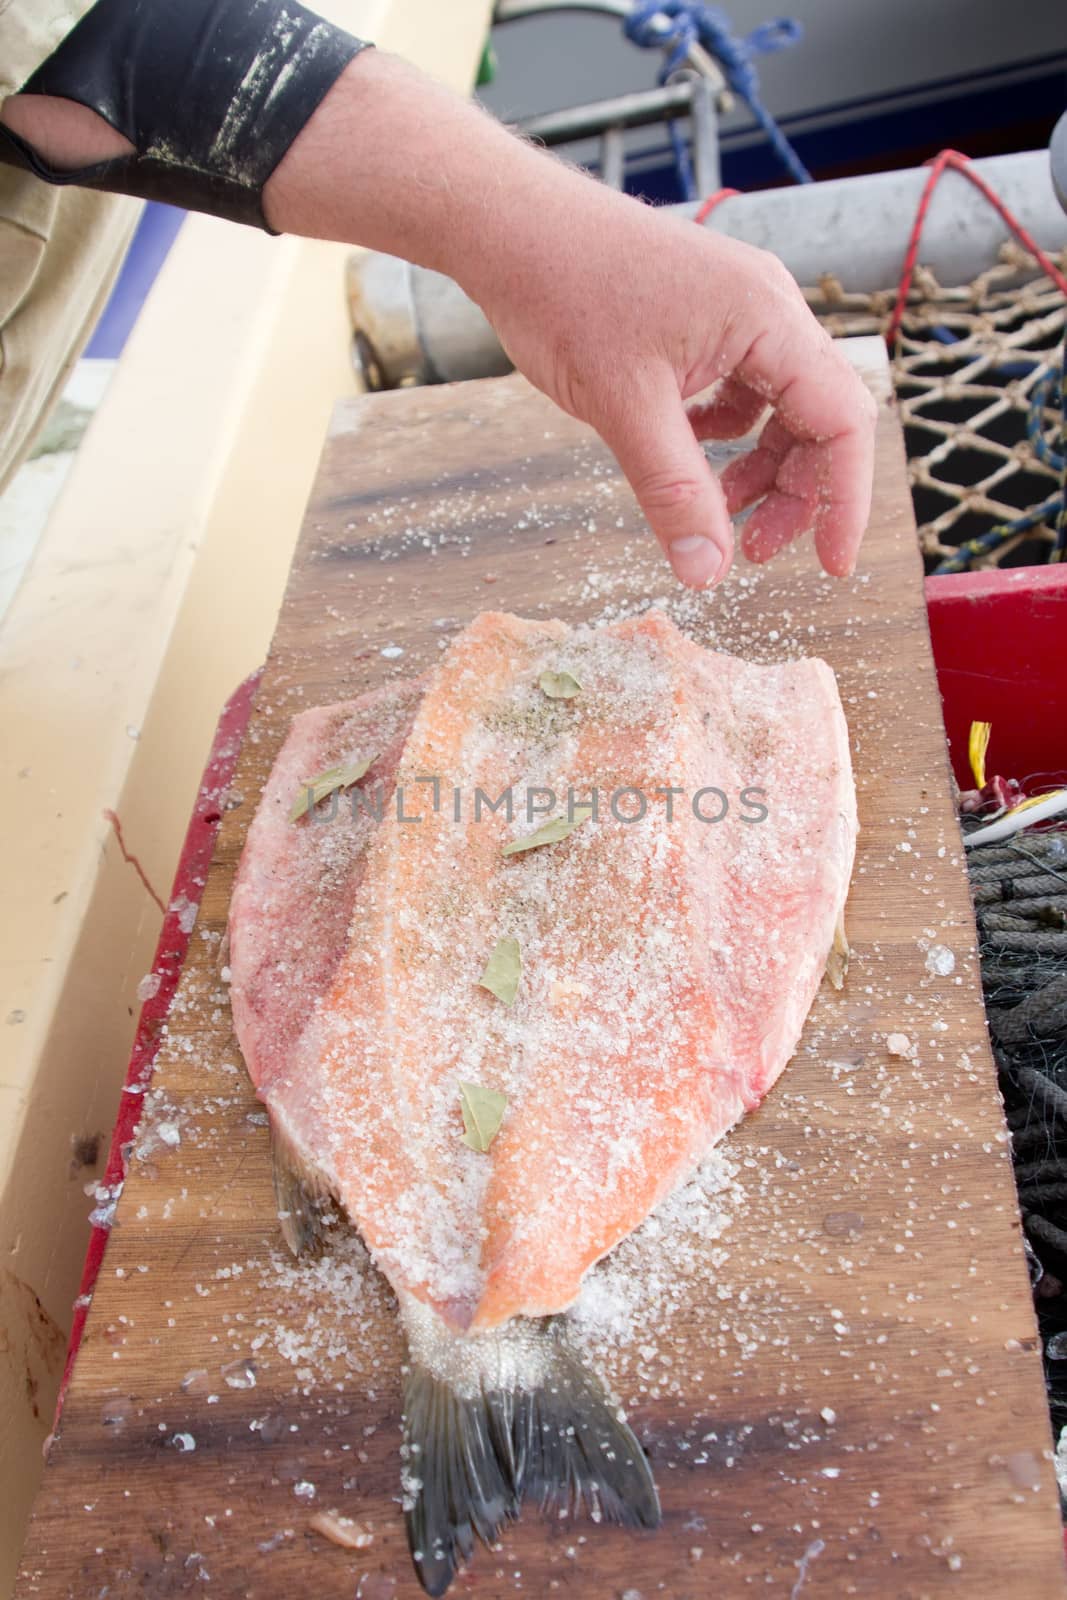 process of salting of fresh sea fish